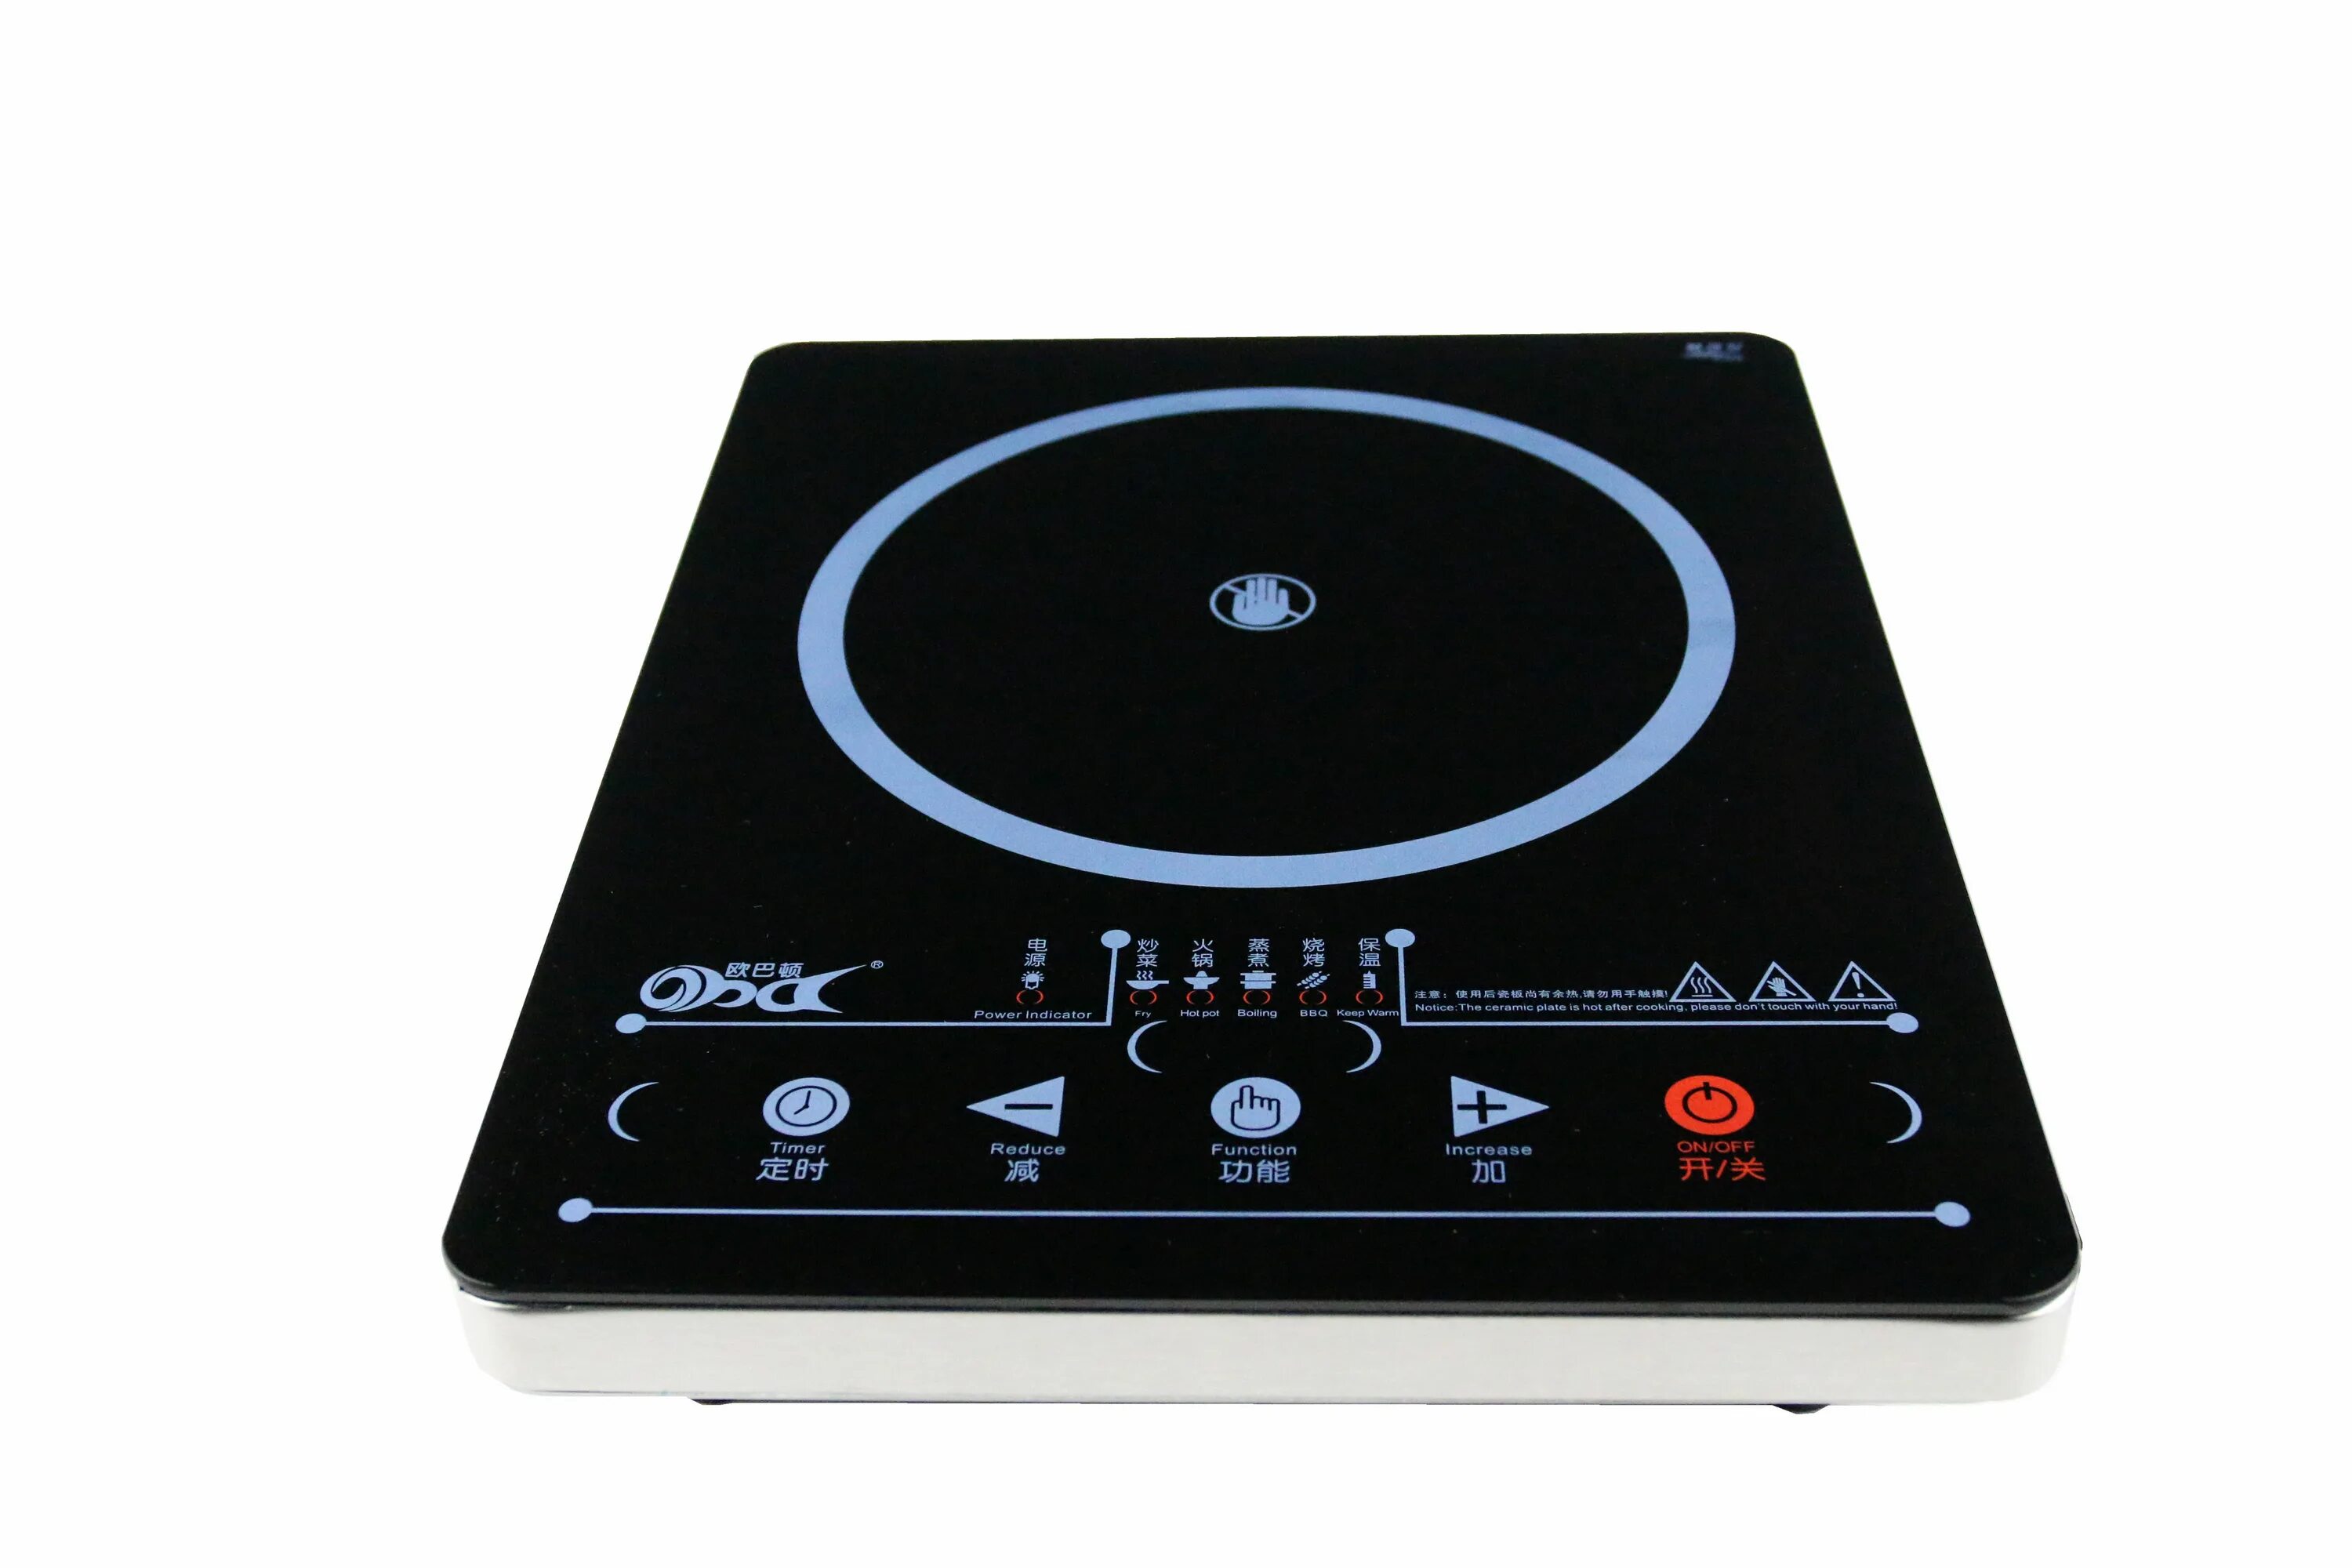 Плиты атлант. Индукционная плита homeclub ID-1101. Dav304 индукционная плита. Индукционная плита Kitchen Robot.